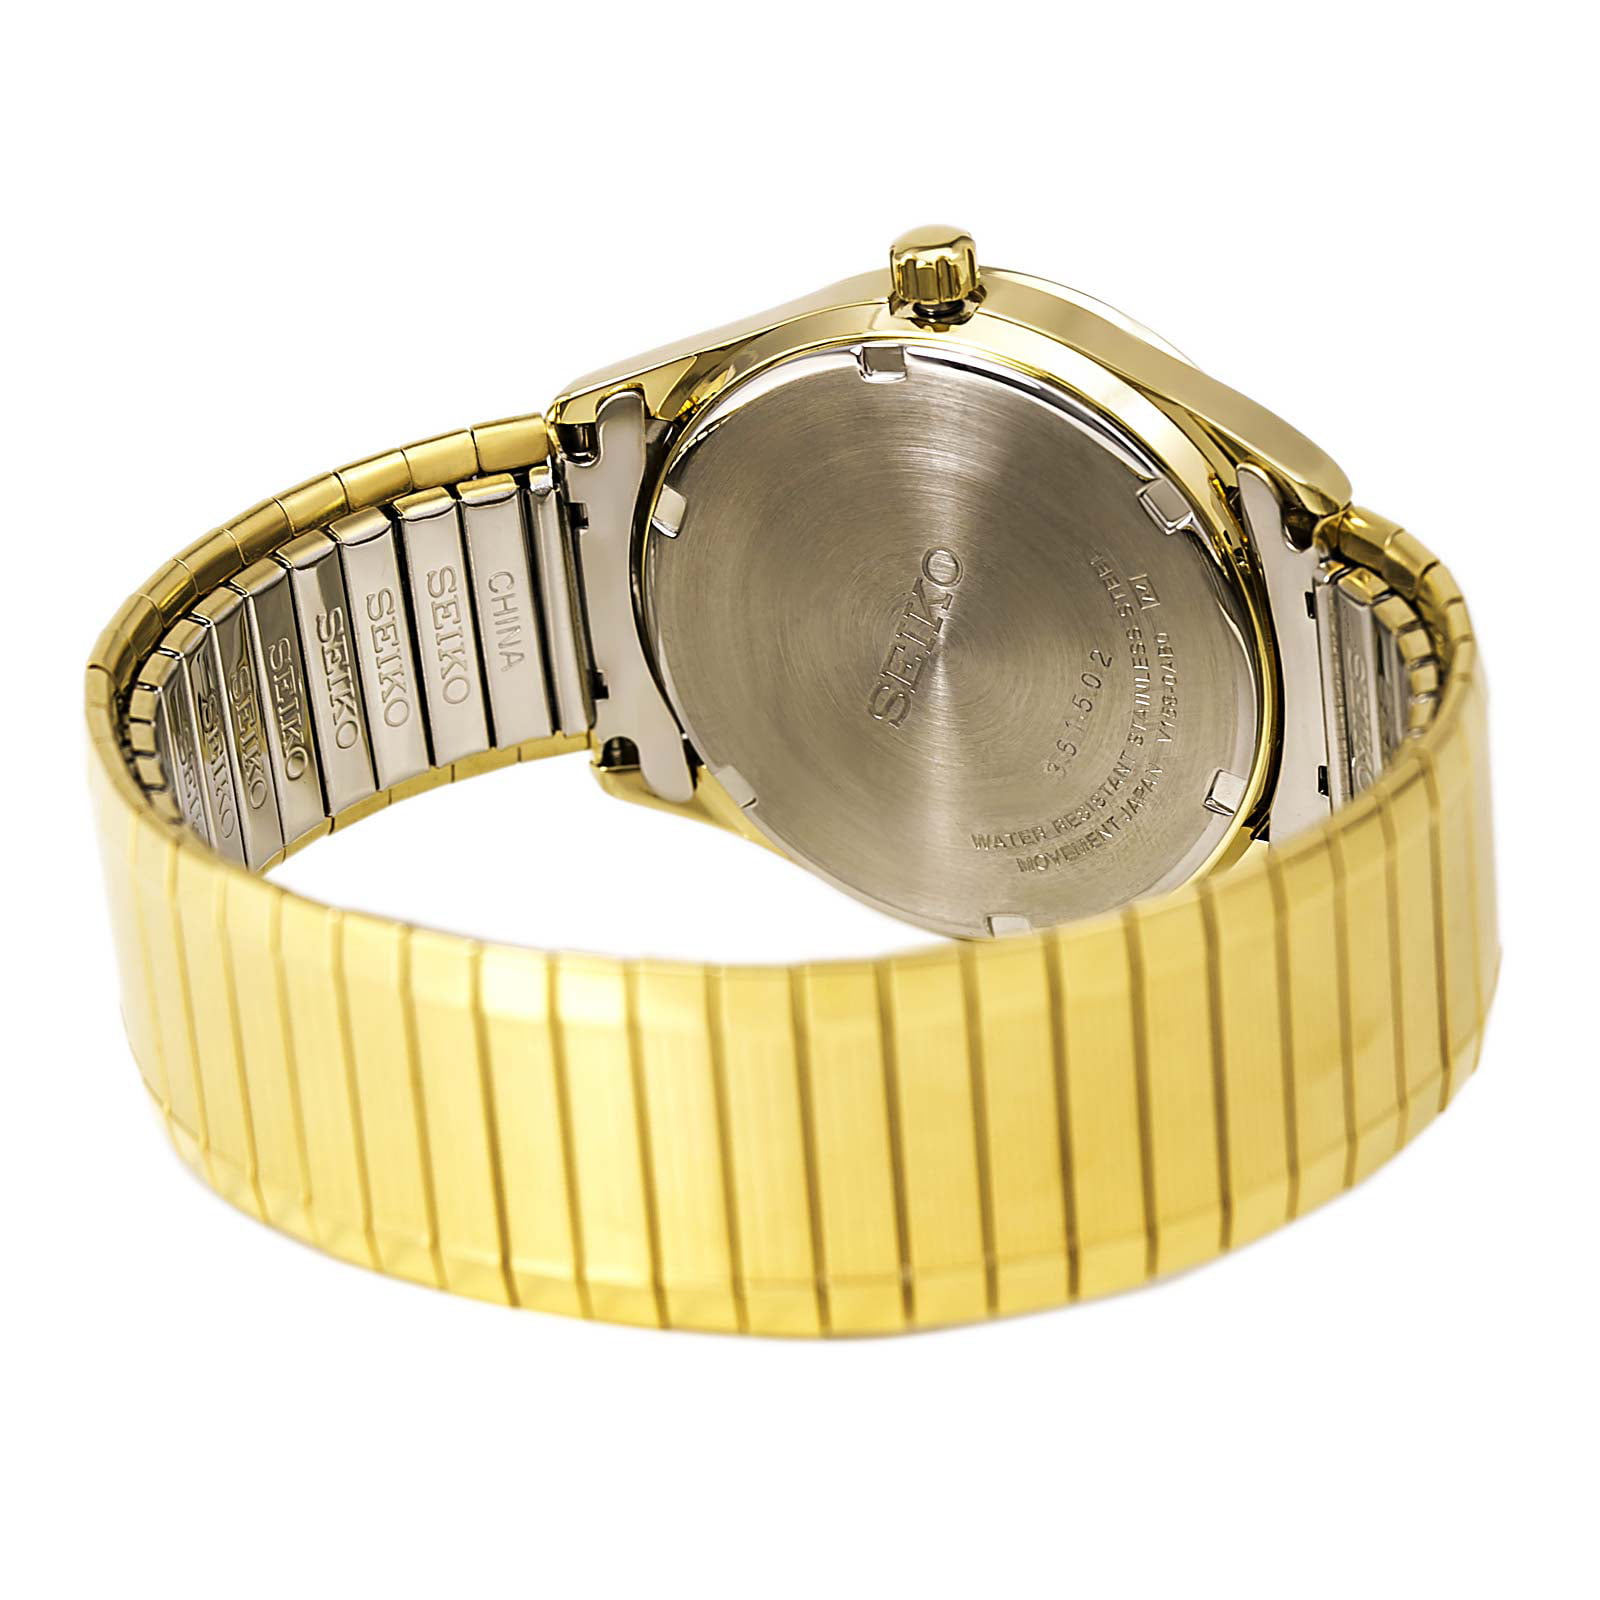 Seiko Men's Solar Quartz Gold-tone Expansion Band Watch SNE058 